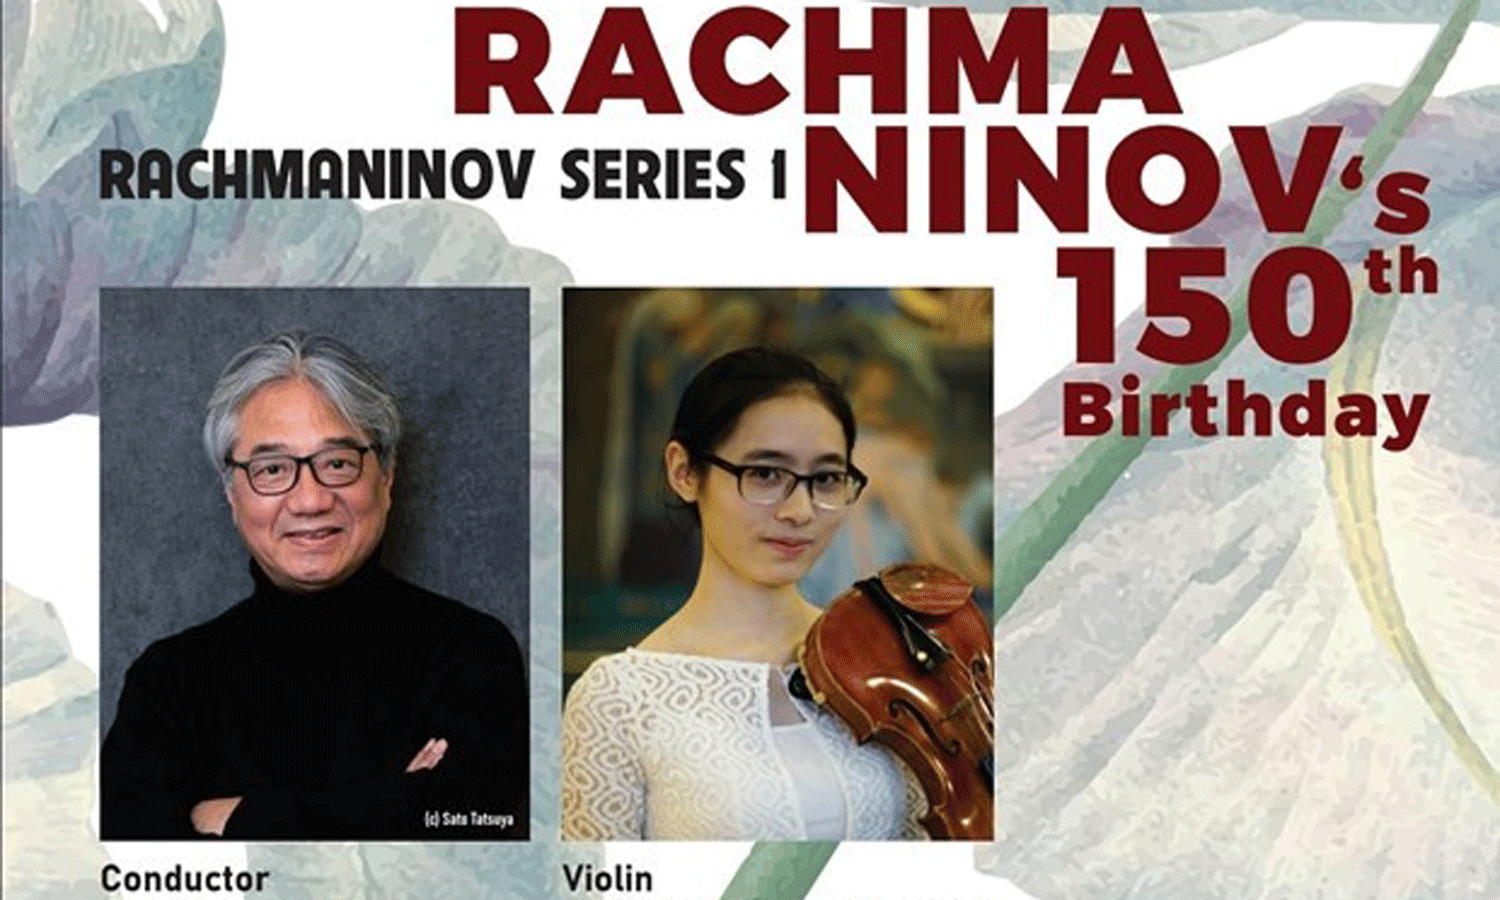 Concert marking 150th birthday of Rachmaninov to open in Hanoi on February 17 (Photo: VNA).